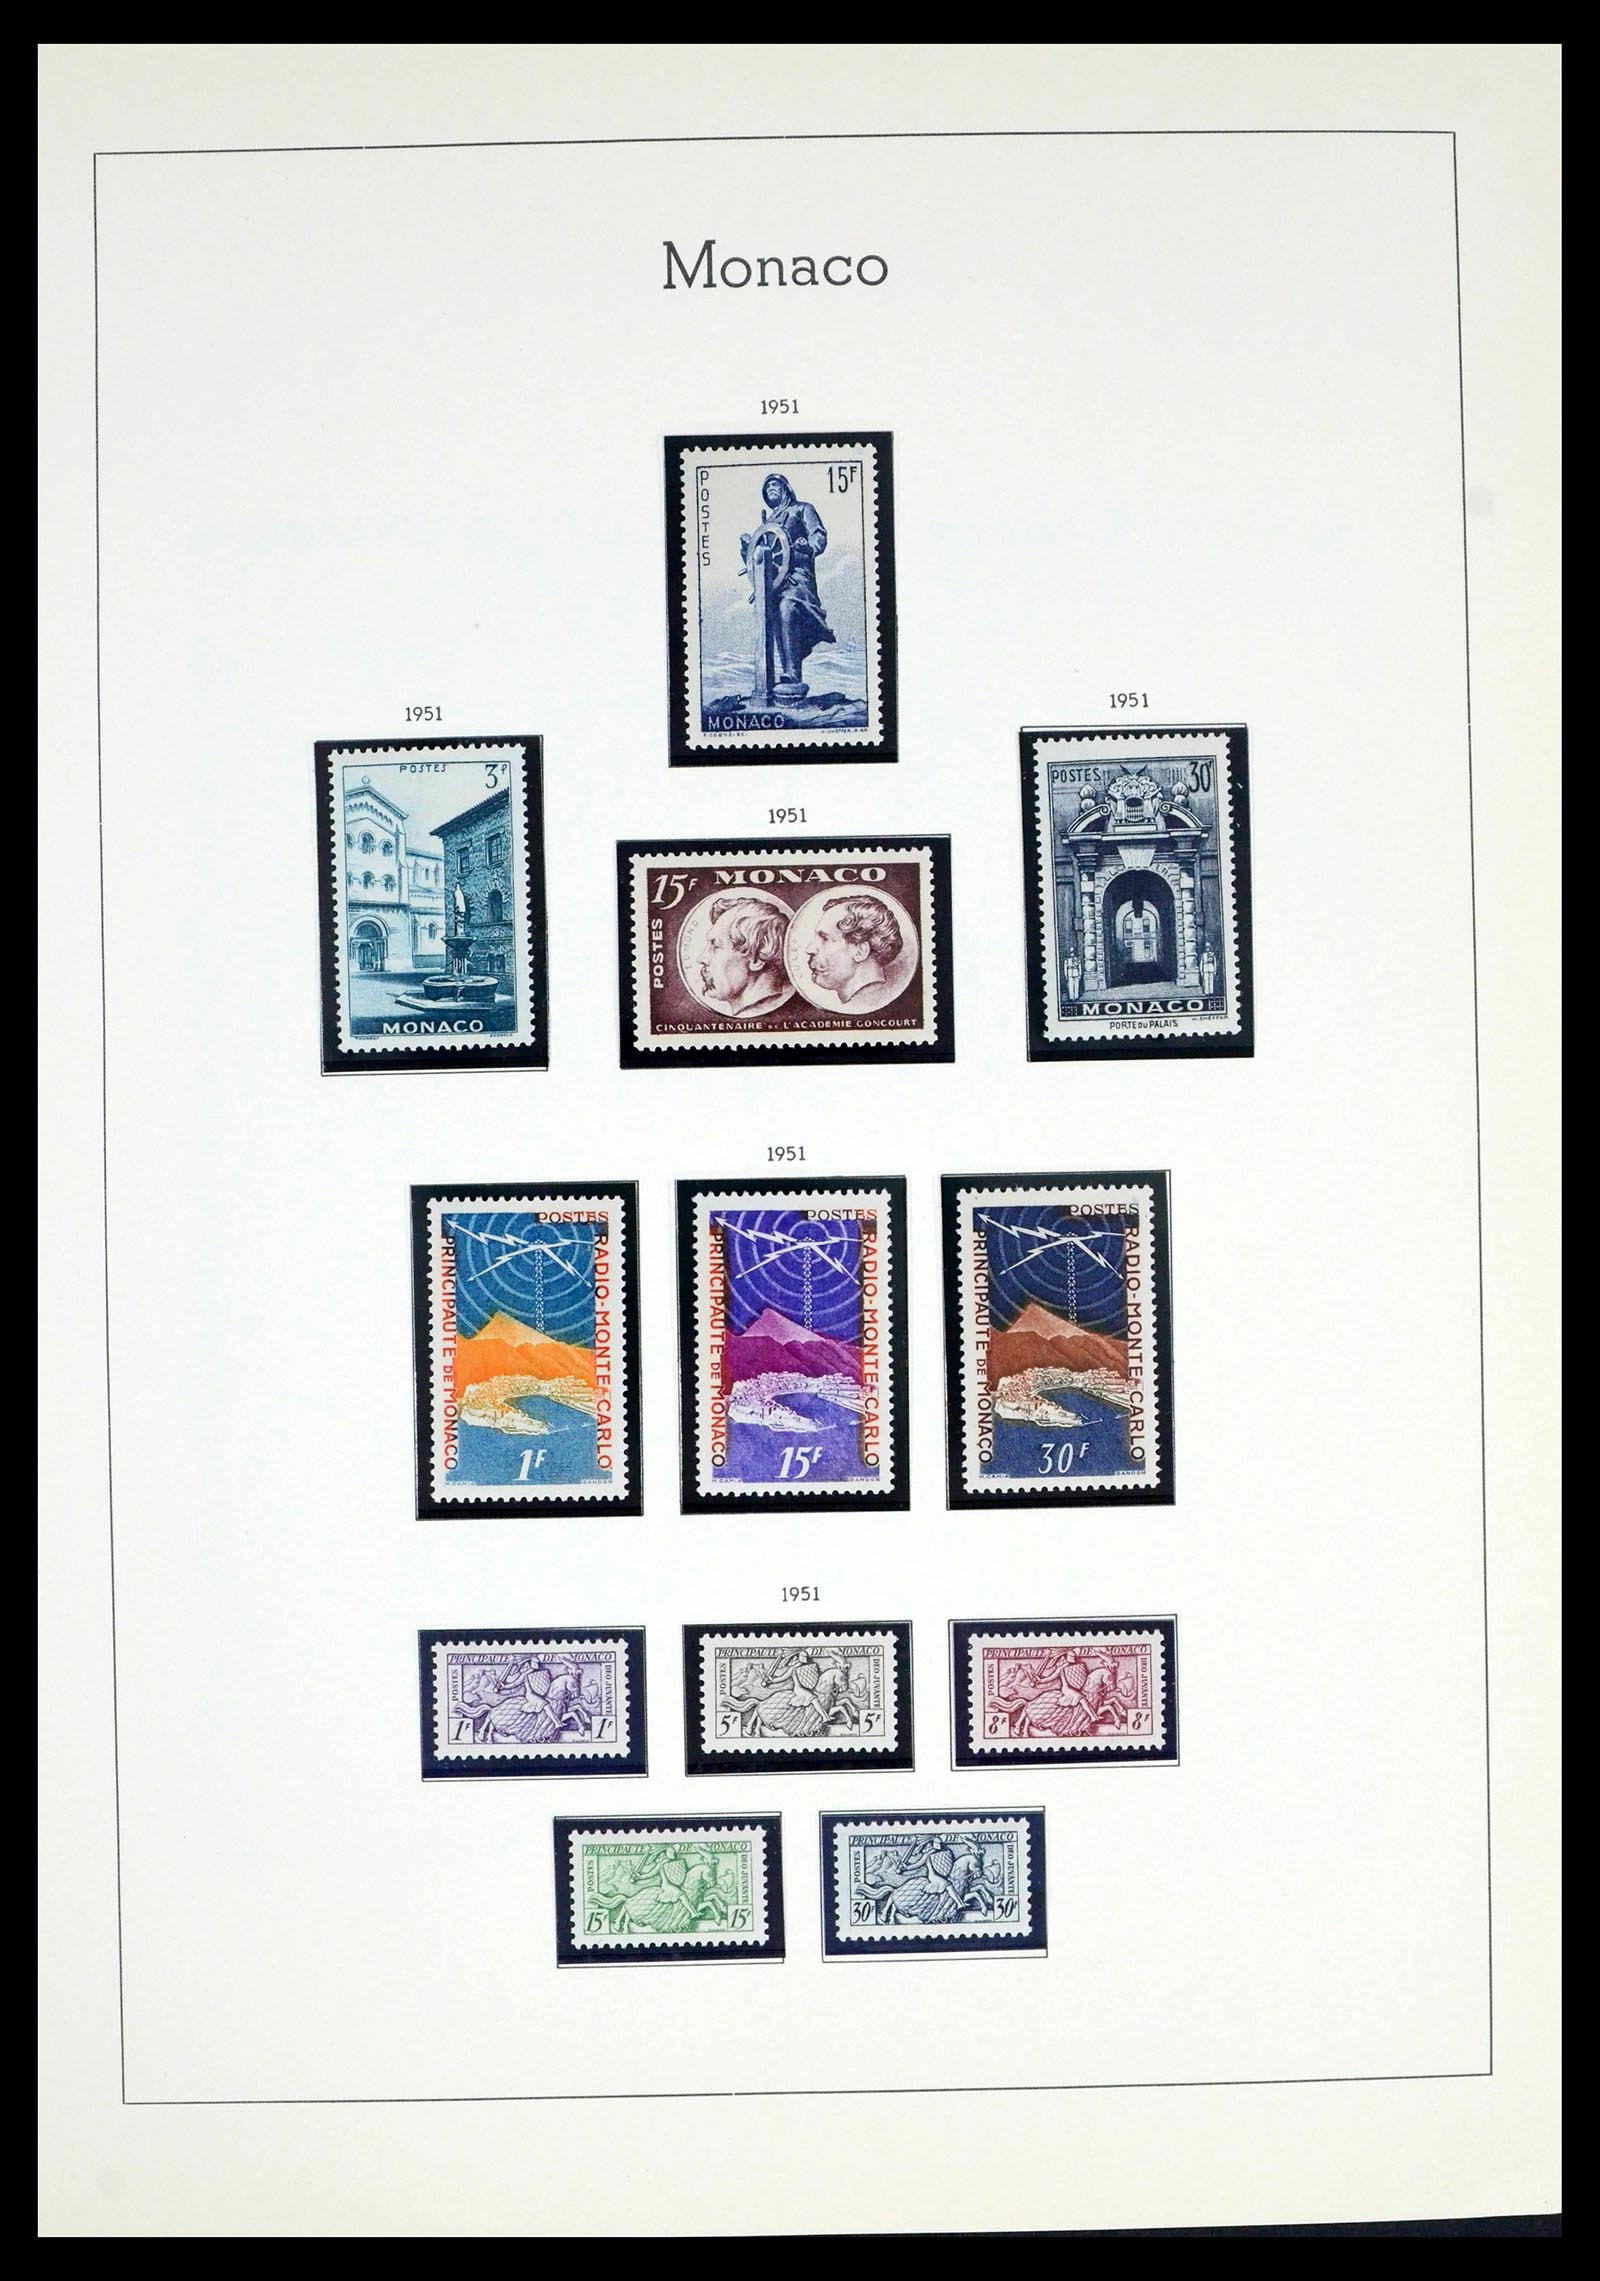 39392 0040 - Stamp collection 39392 Monaco 1885-1999.